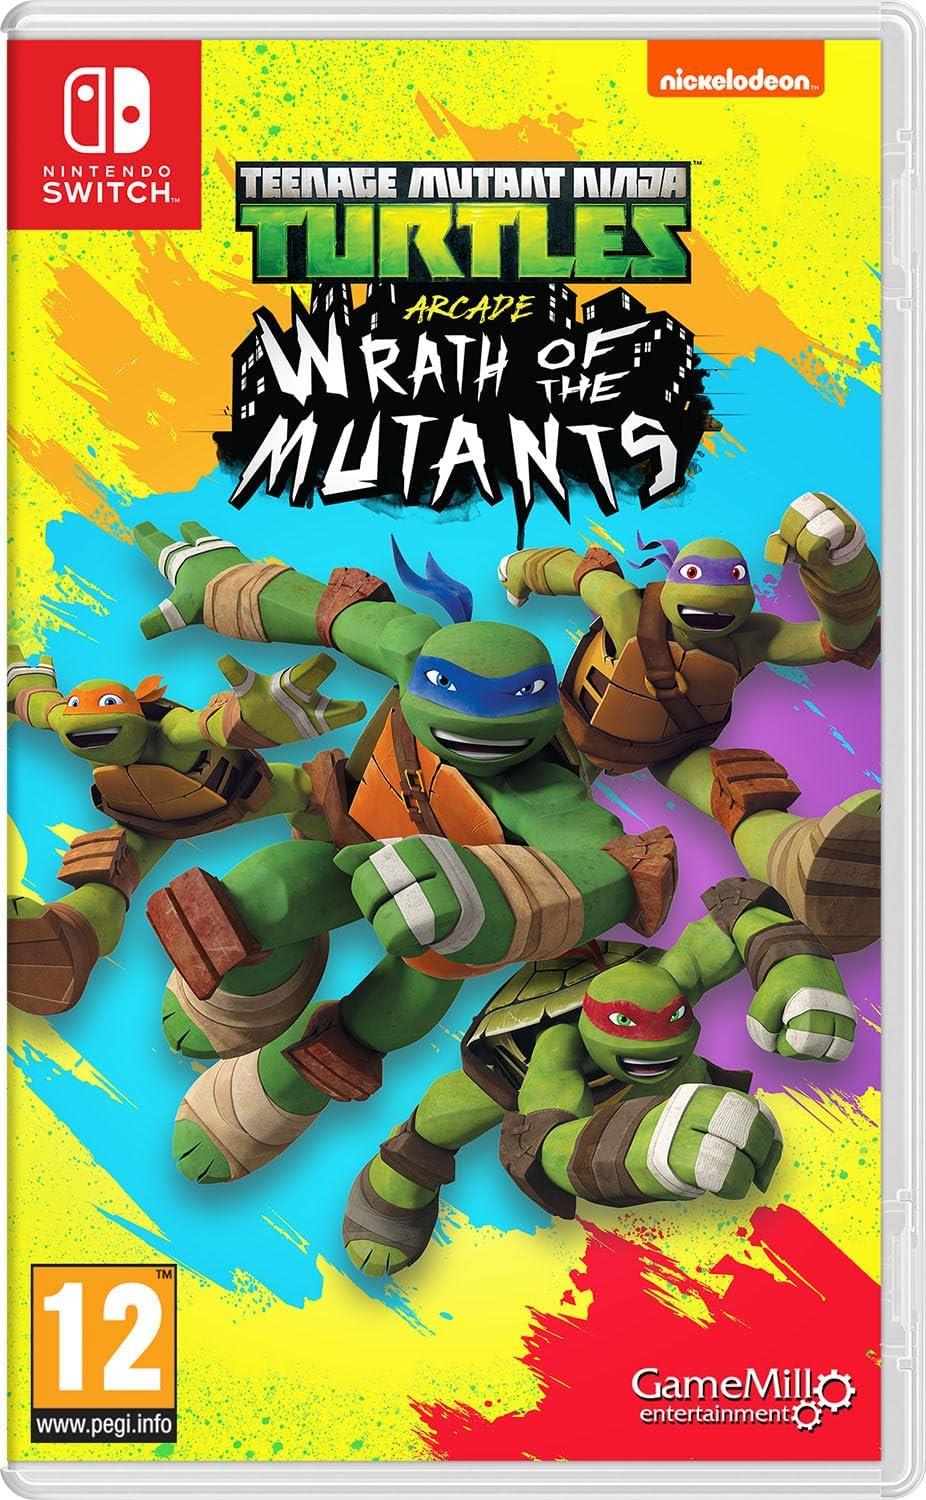 TMNT Arcade: Wrath of the Mutants Nintendo Switch Game